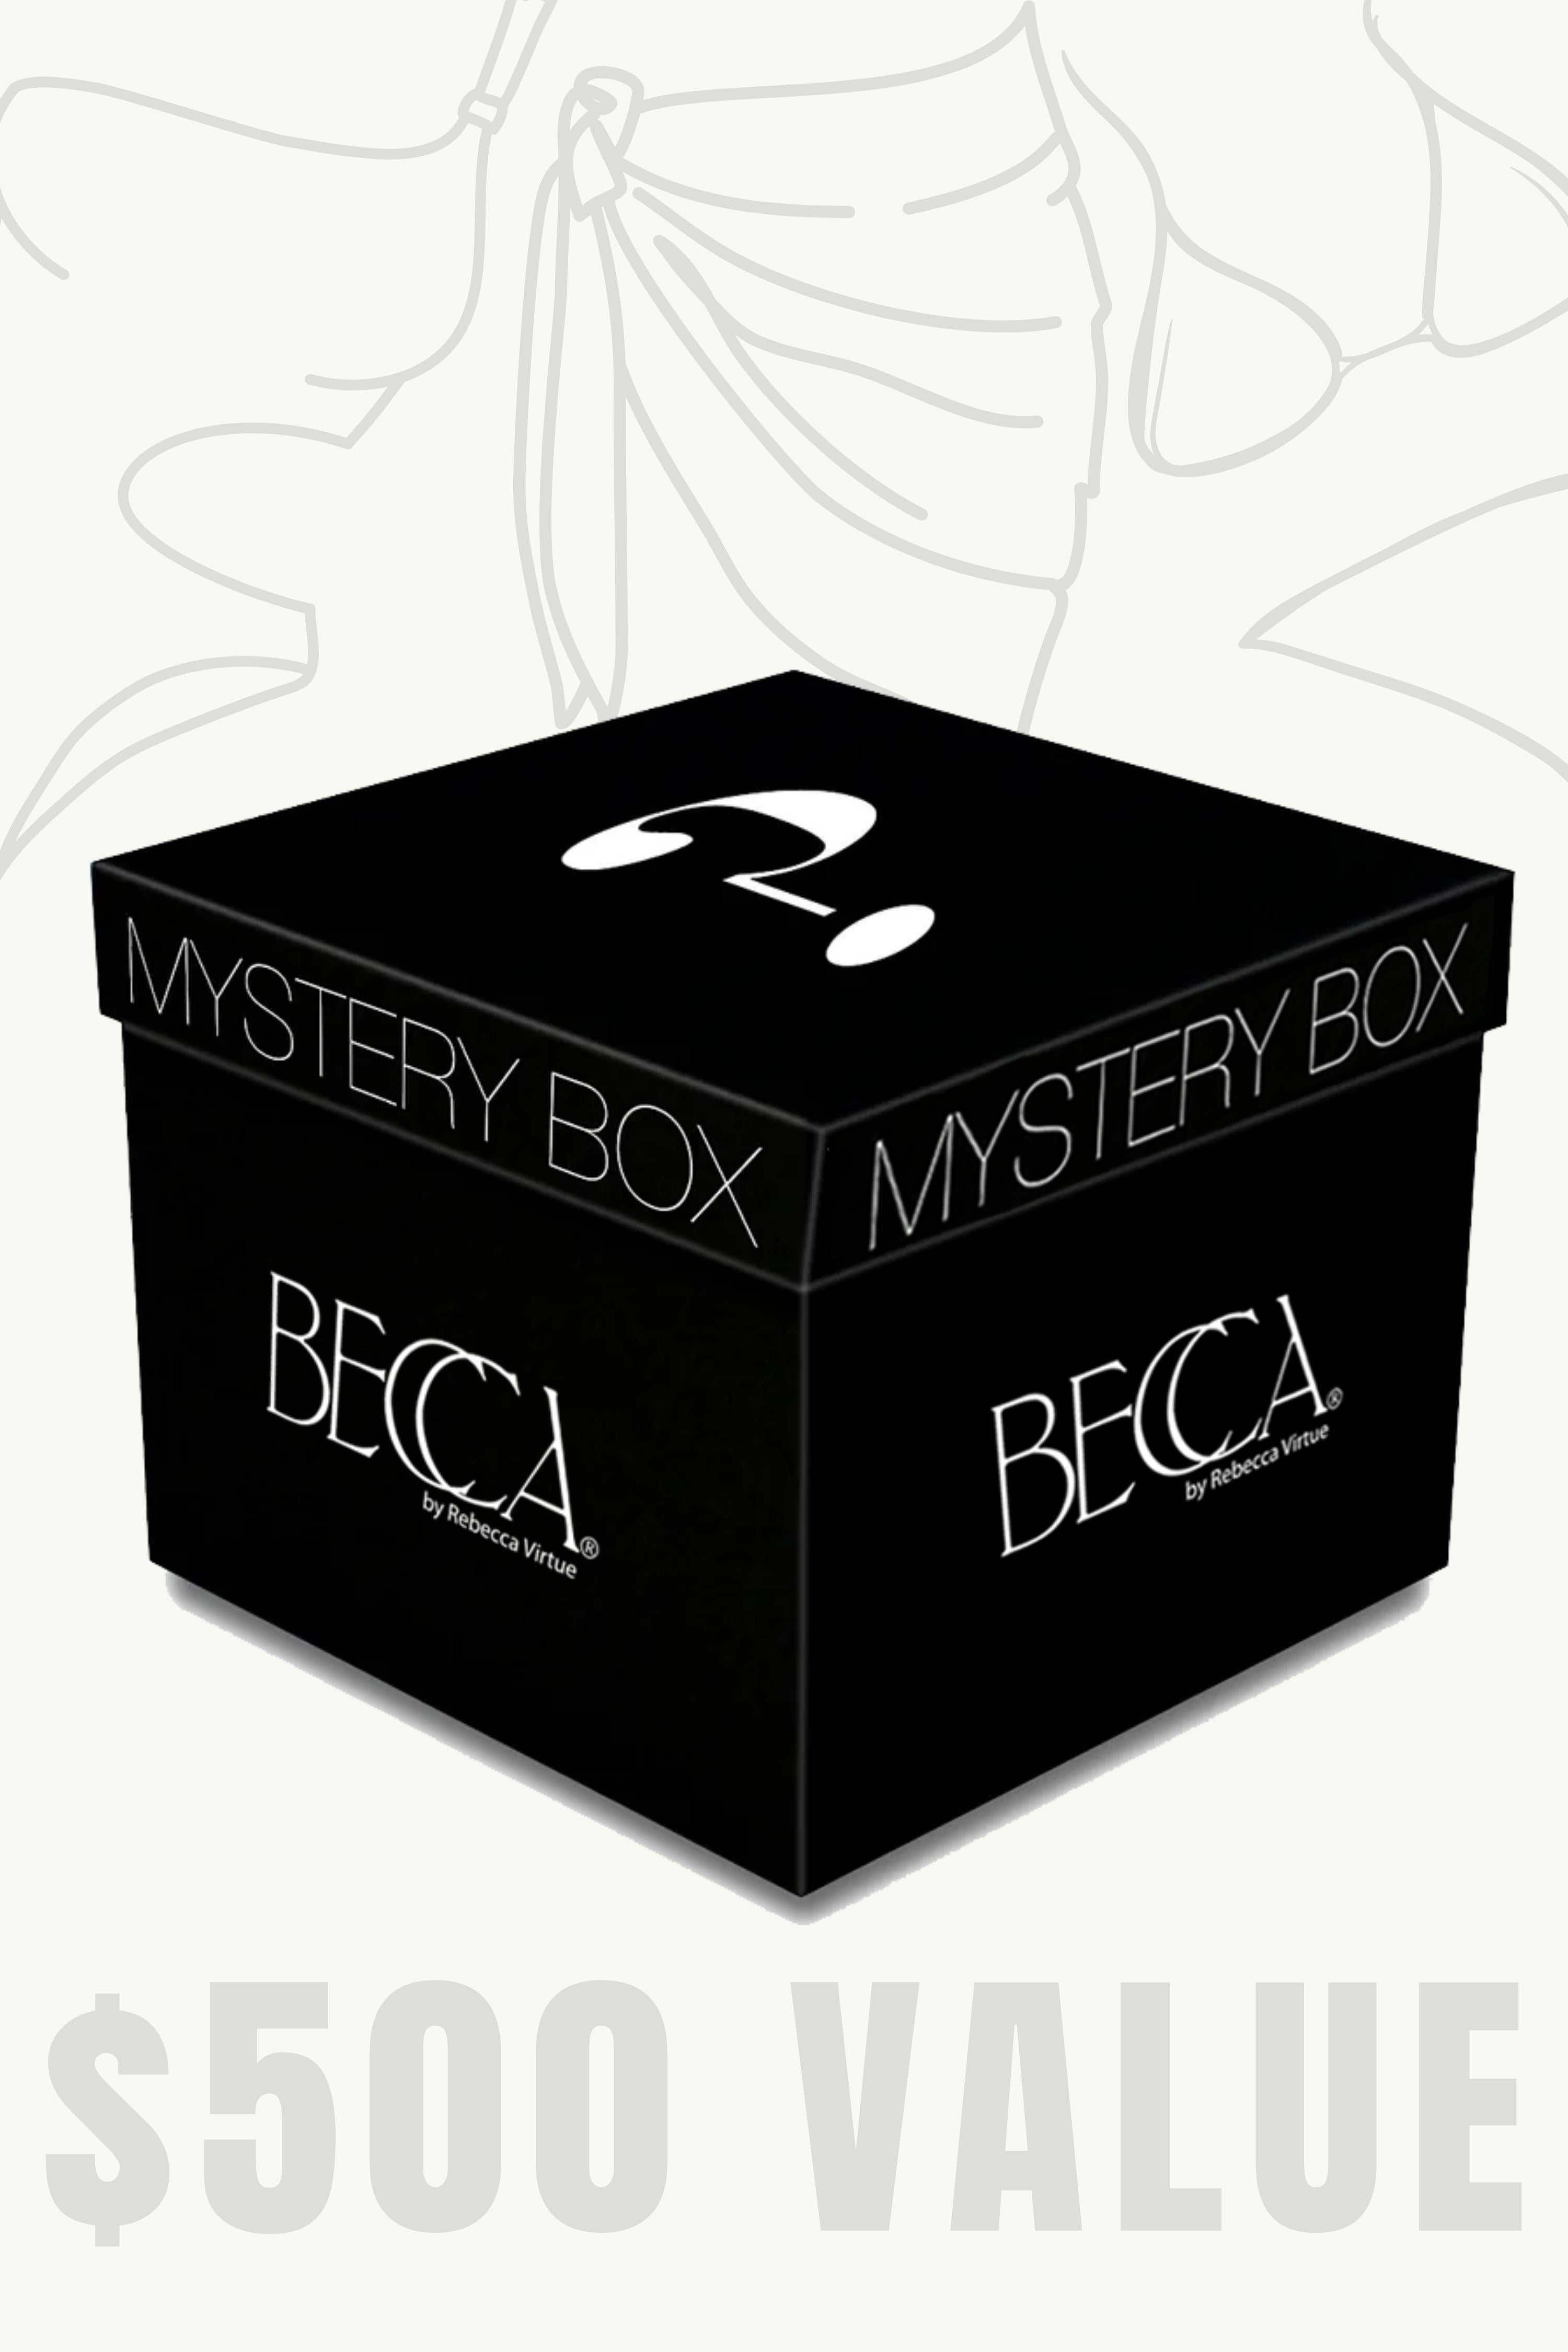 MYSTERY BOX BECCA